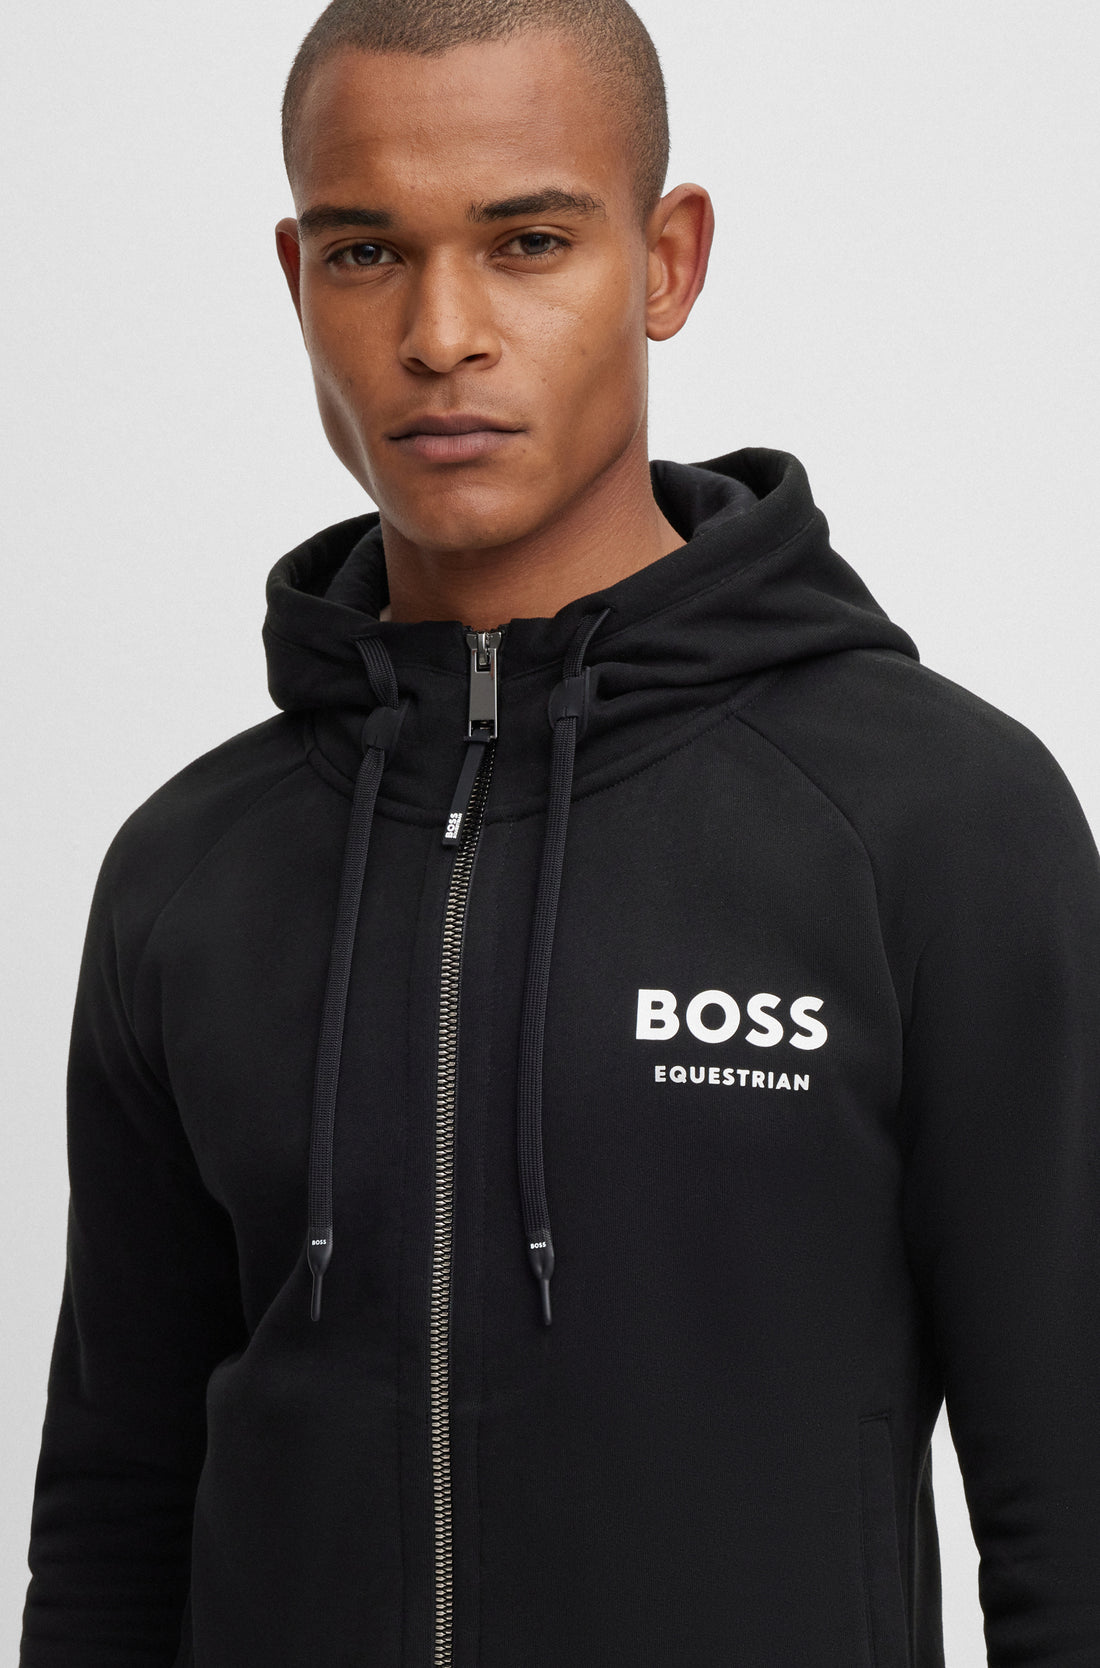 Boss River Black Signature Stripe Zip Sweatshirt